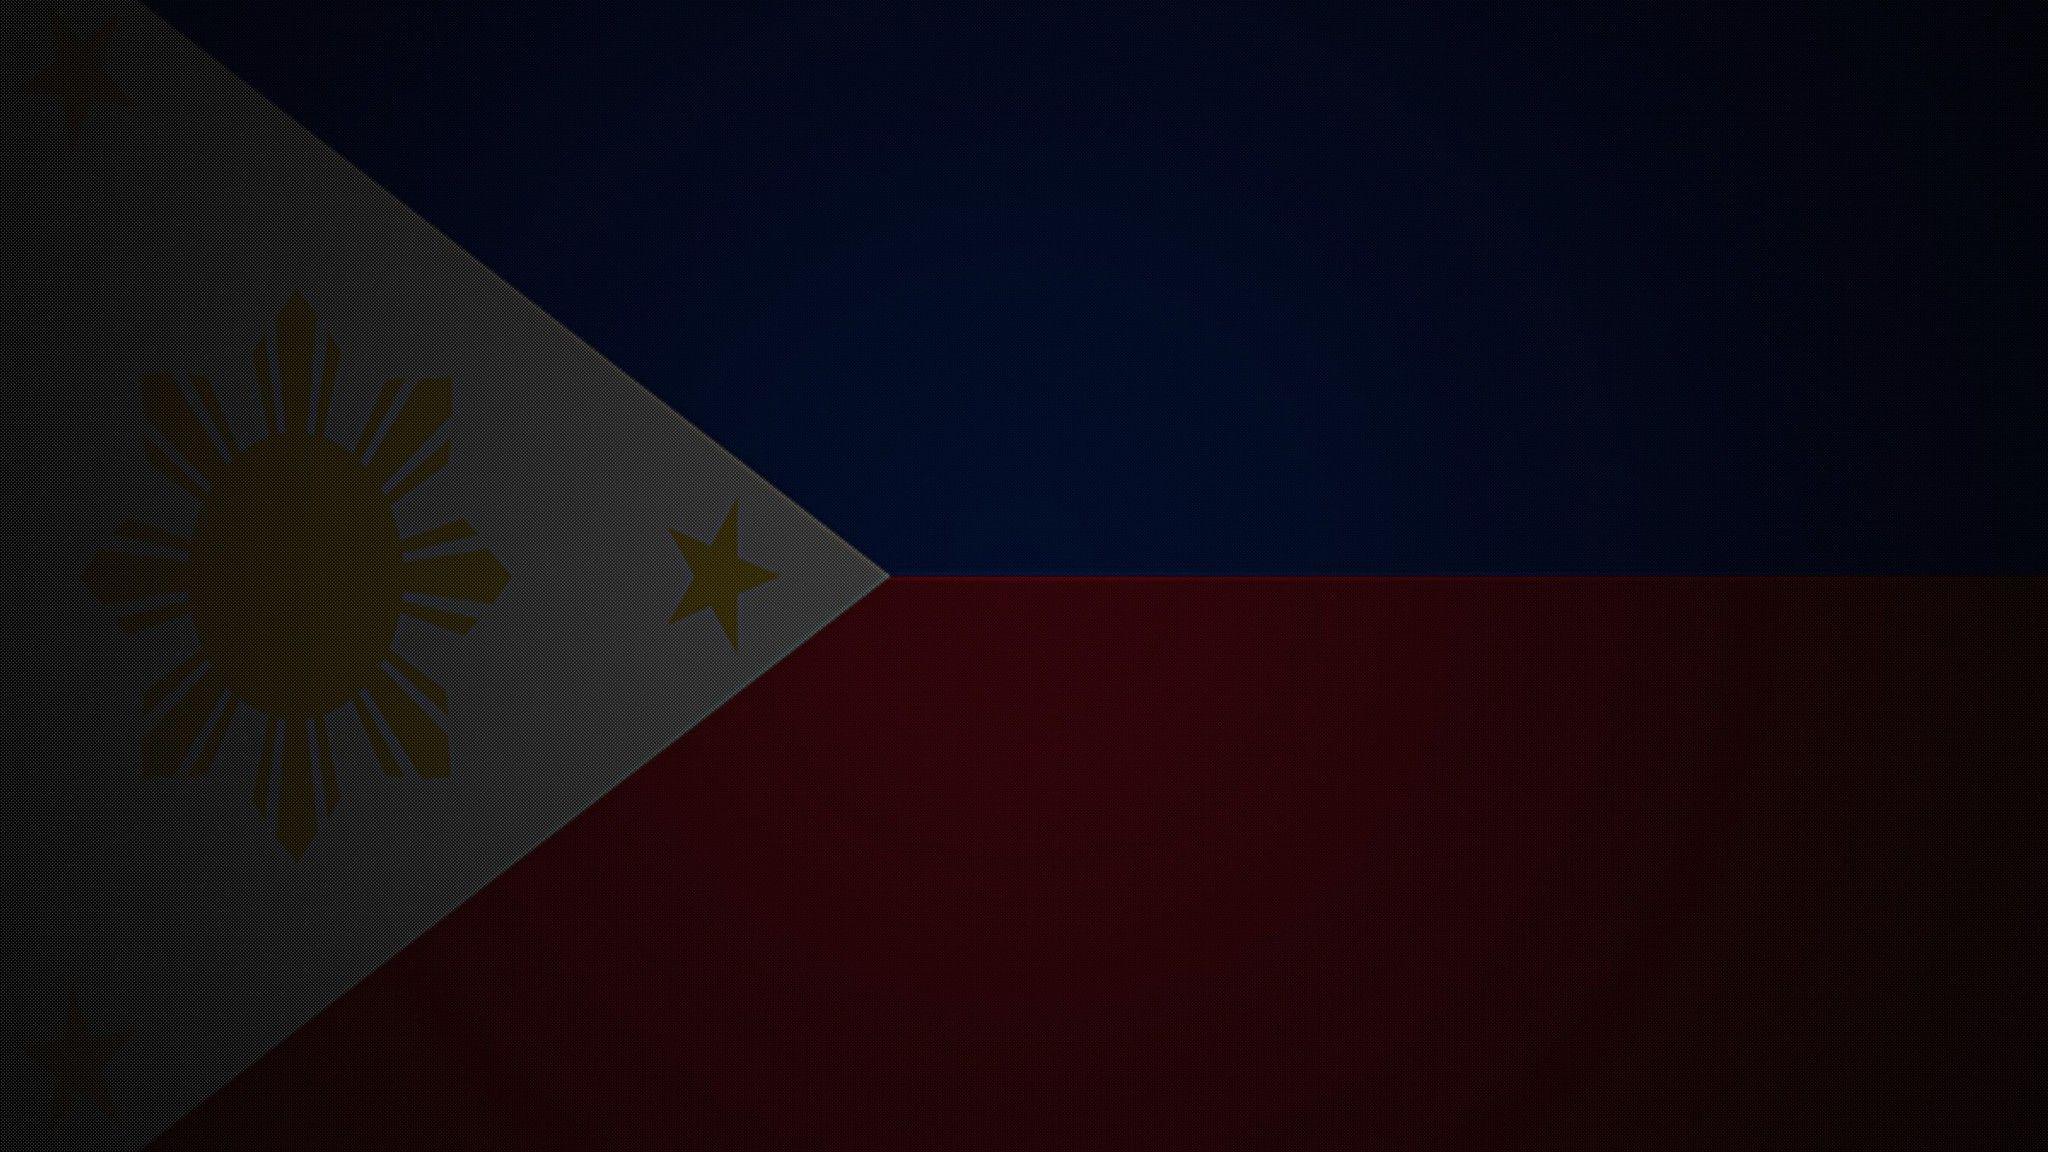 Philippines dark flags share wallpaper